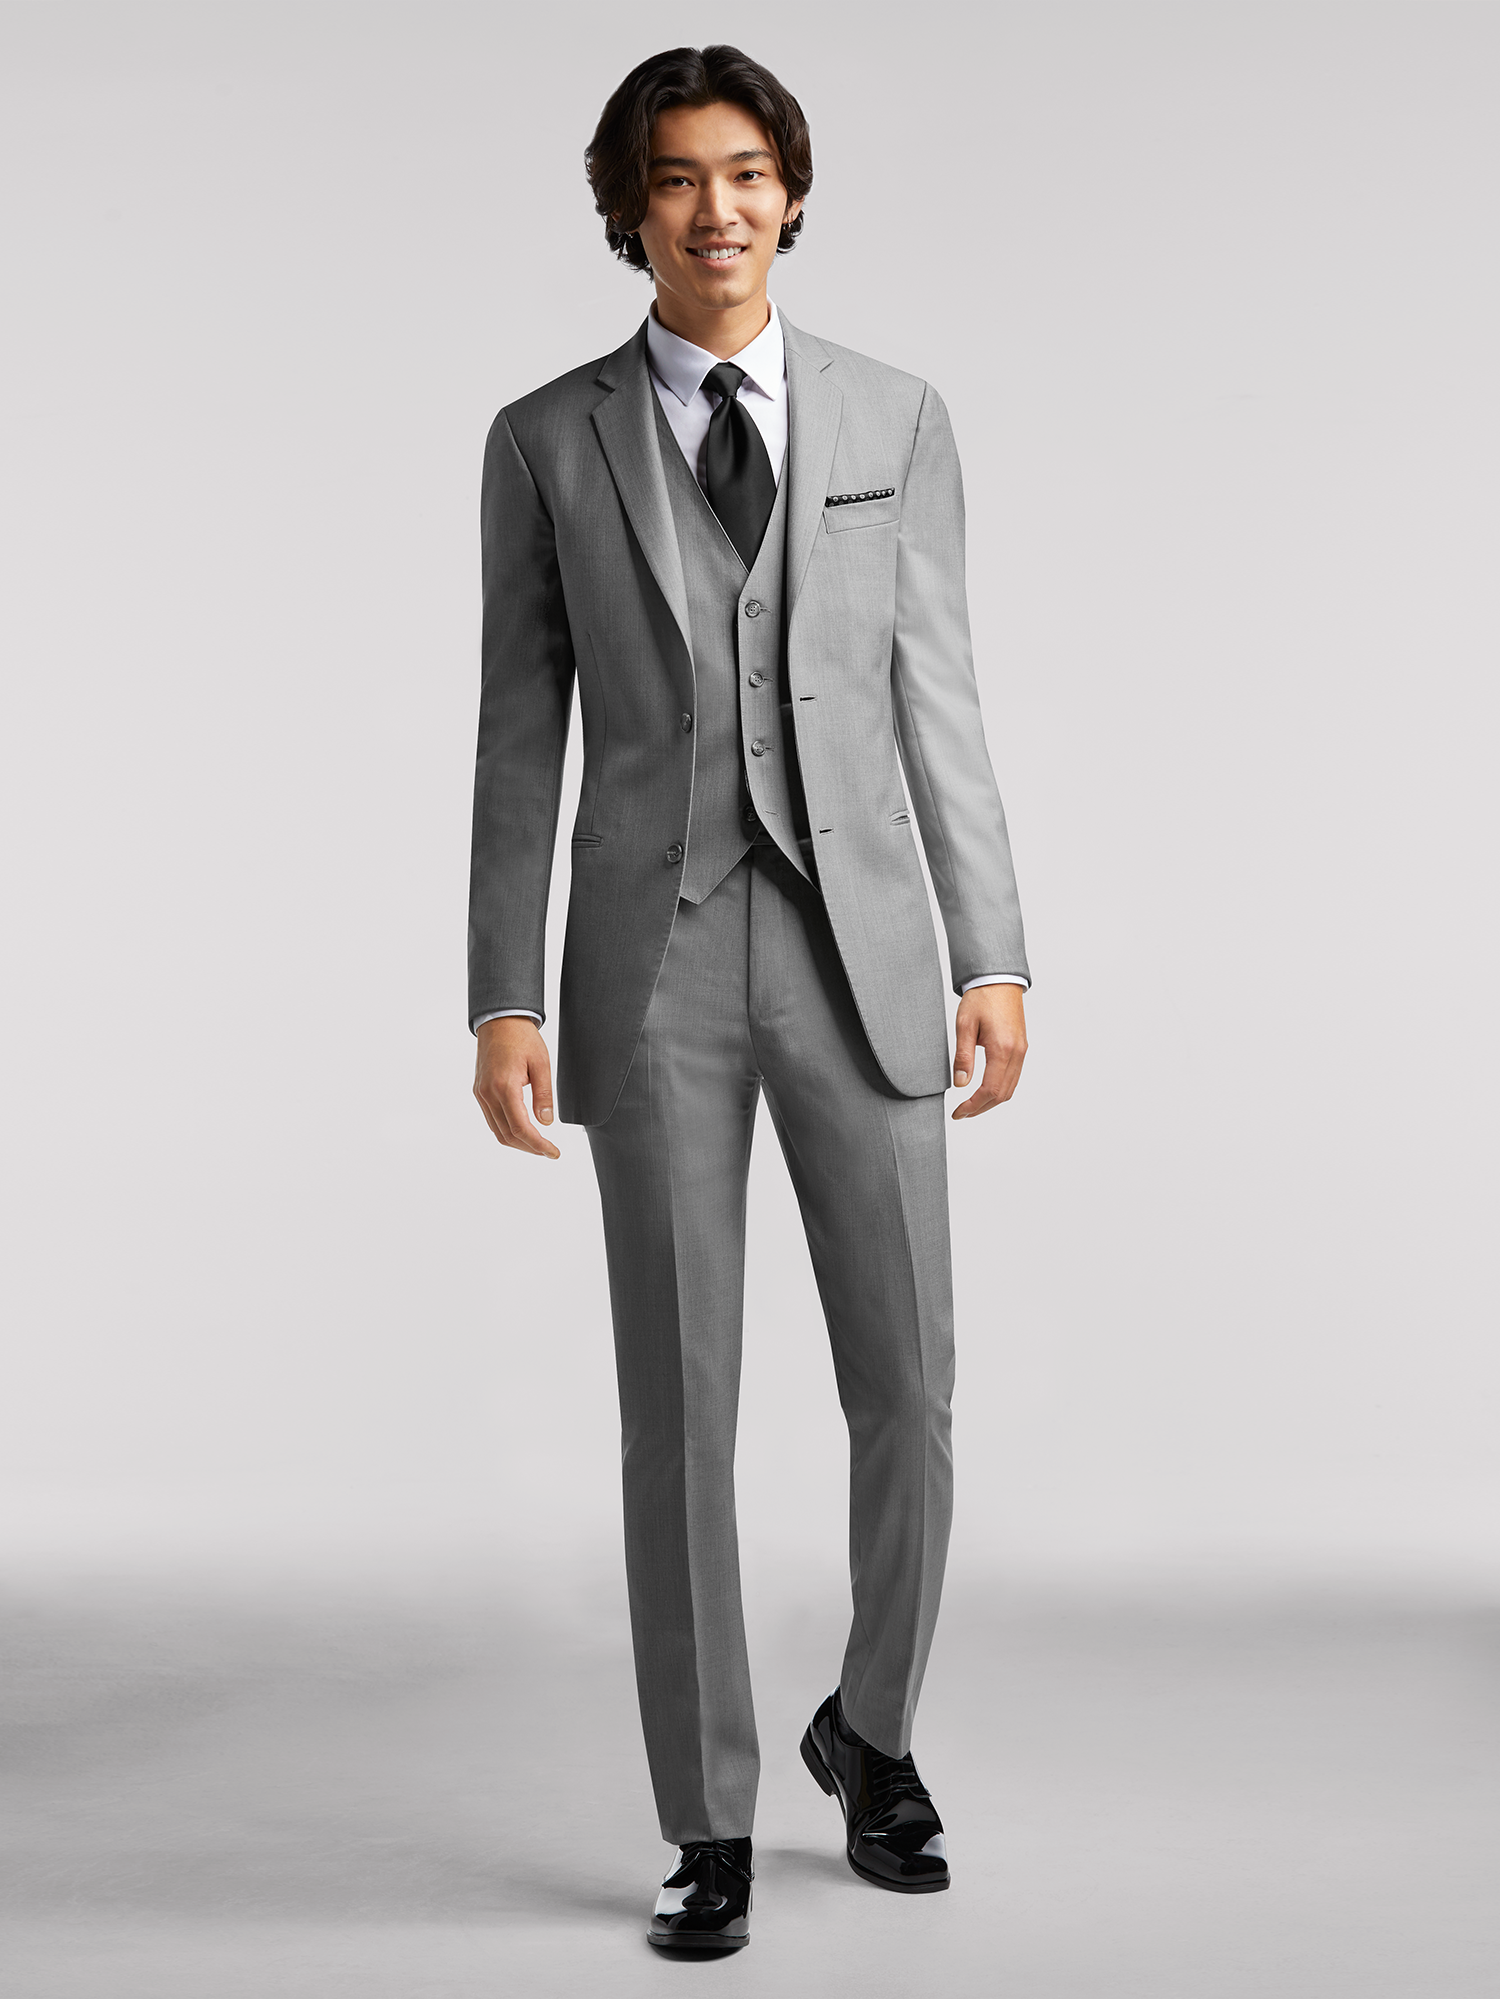 Vintage Men's Gray Suit by Pronto Uomo